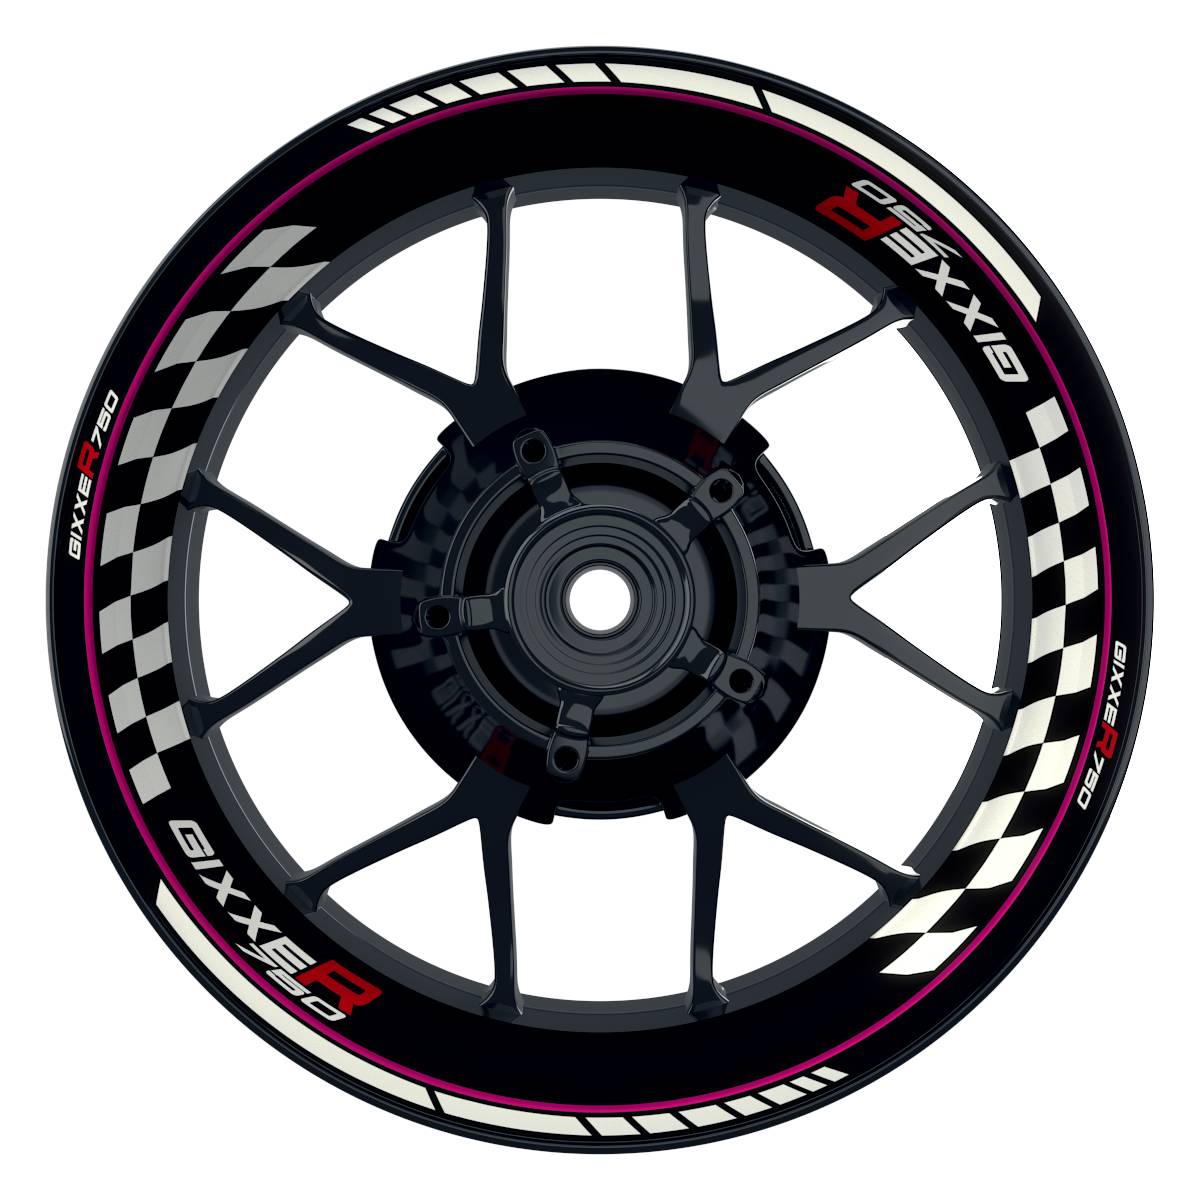 GIXXER750 Grid schwarz pink Wheelsticker Felgenaufkleber